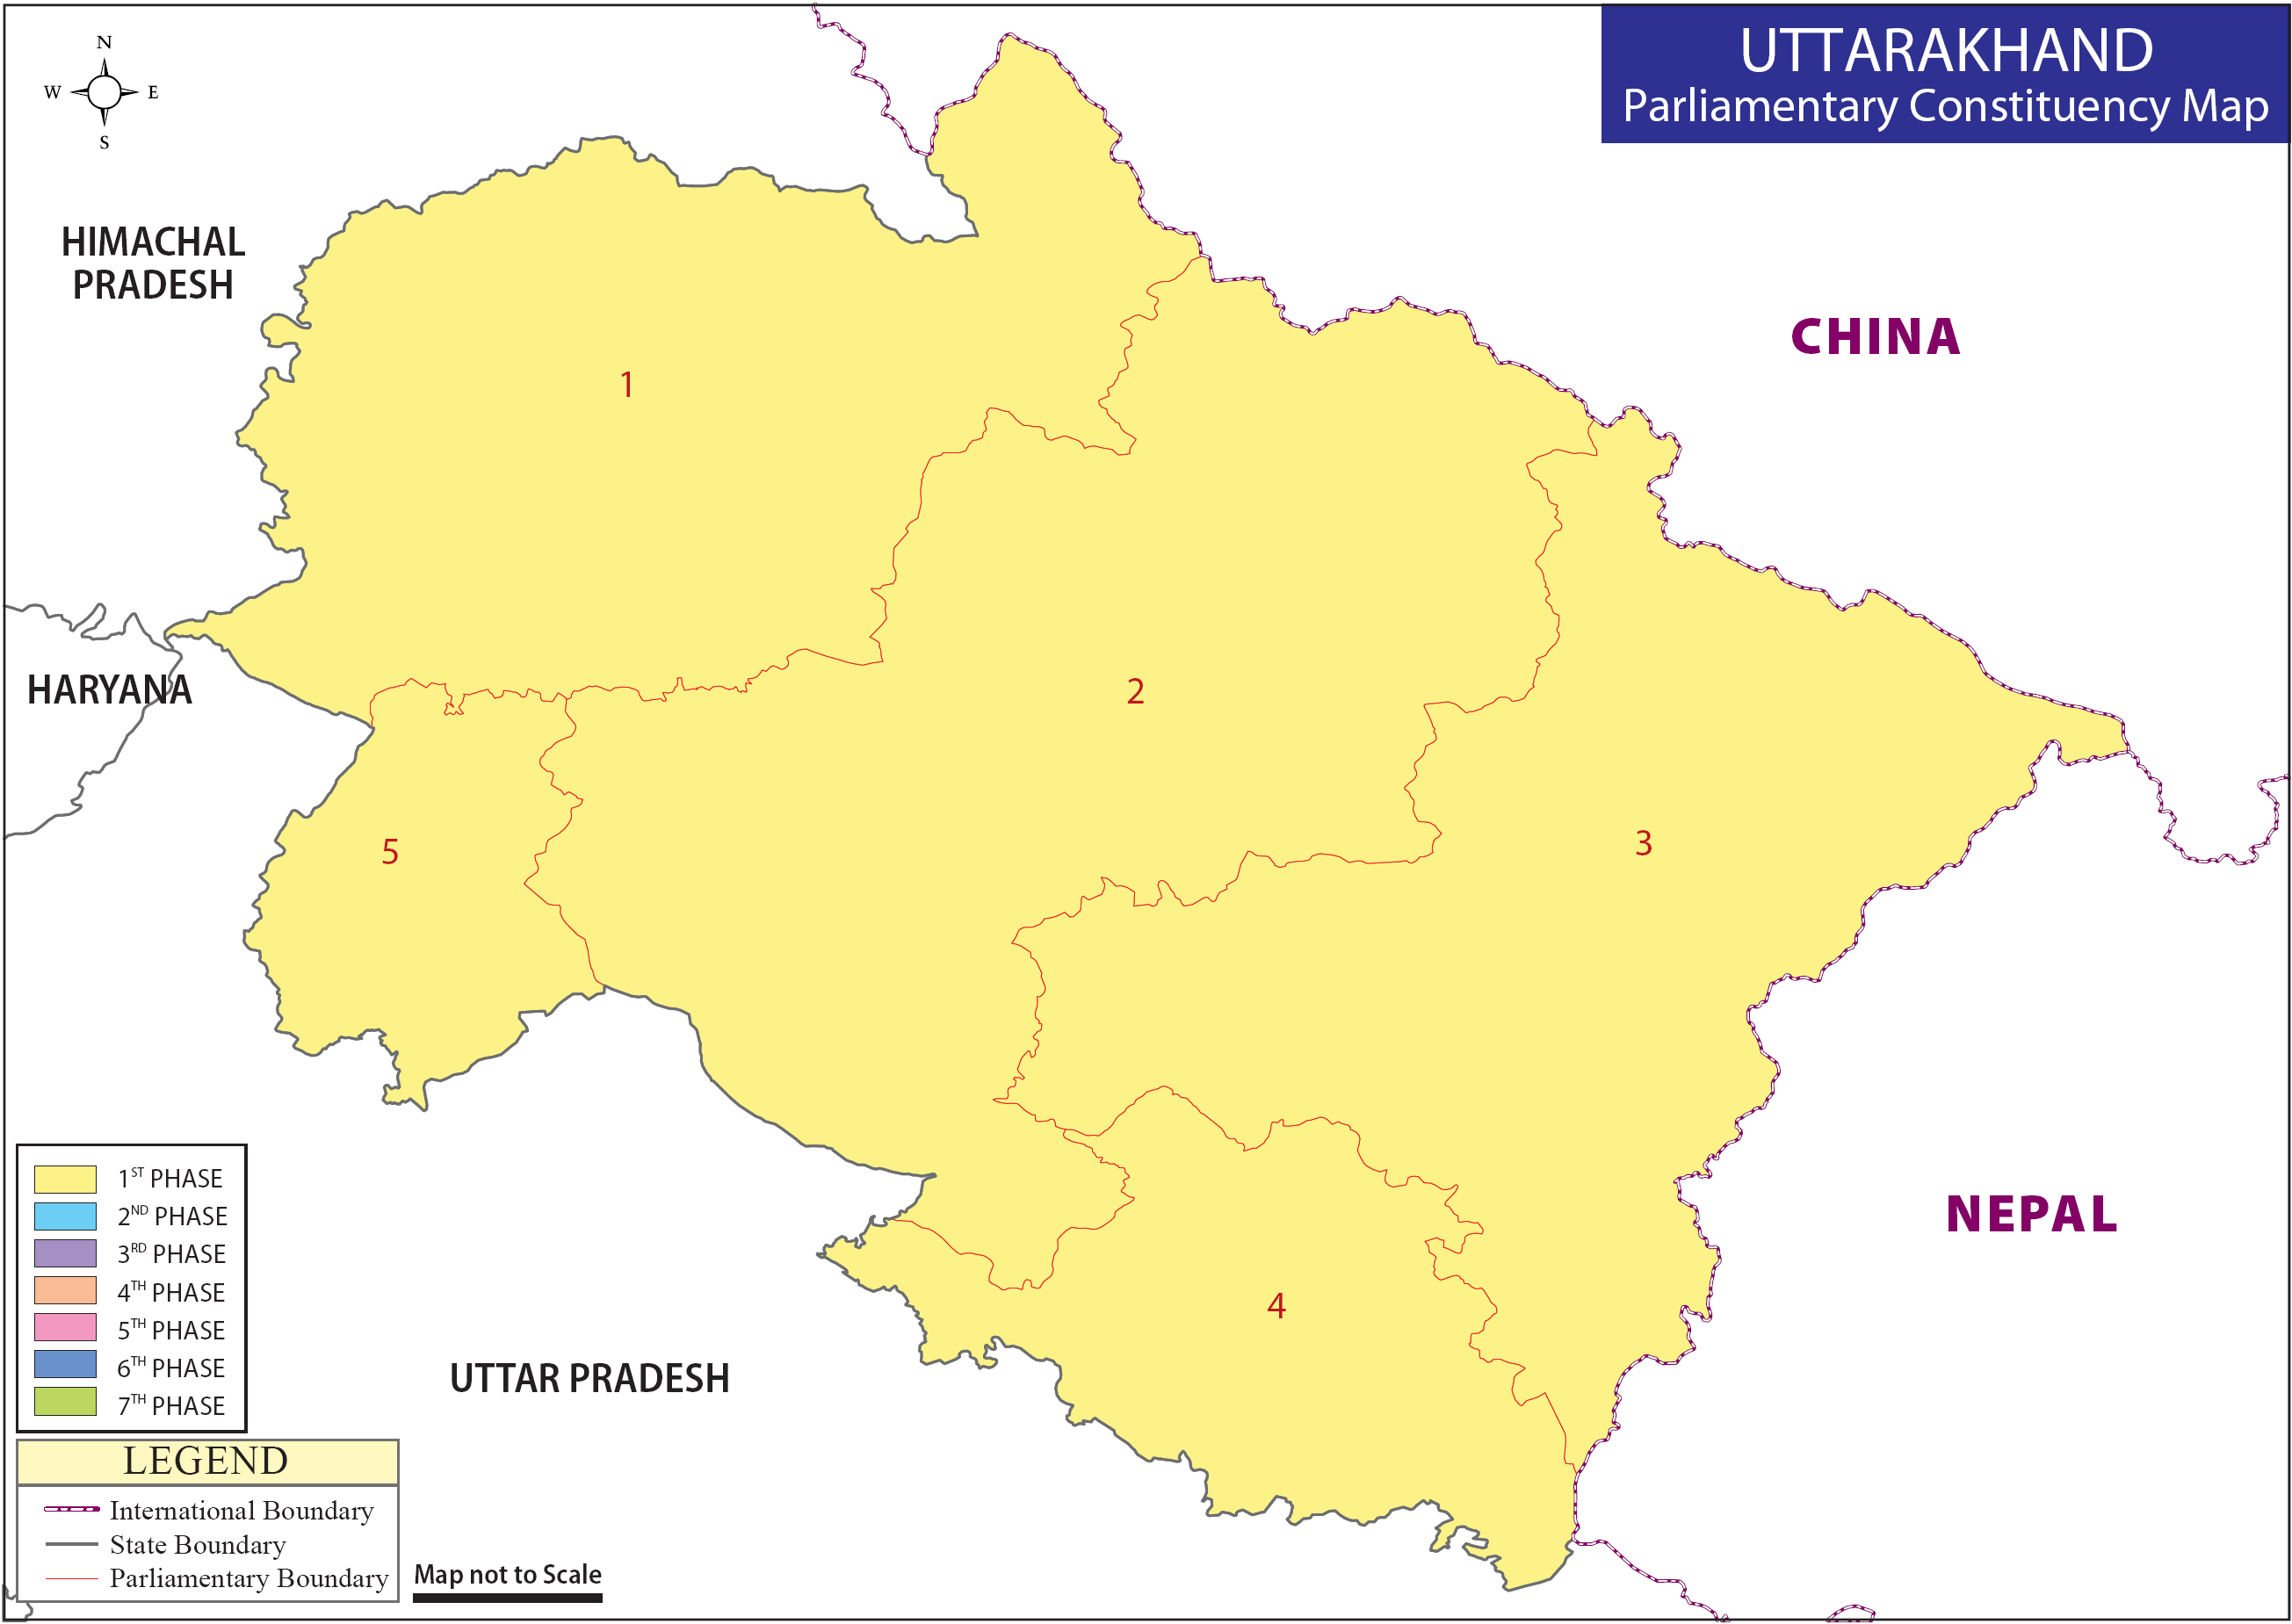 Uttarakhand Parliamentary Constituency Map